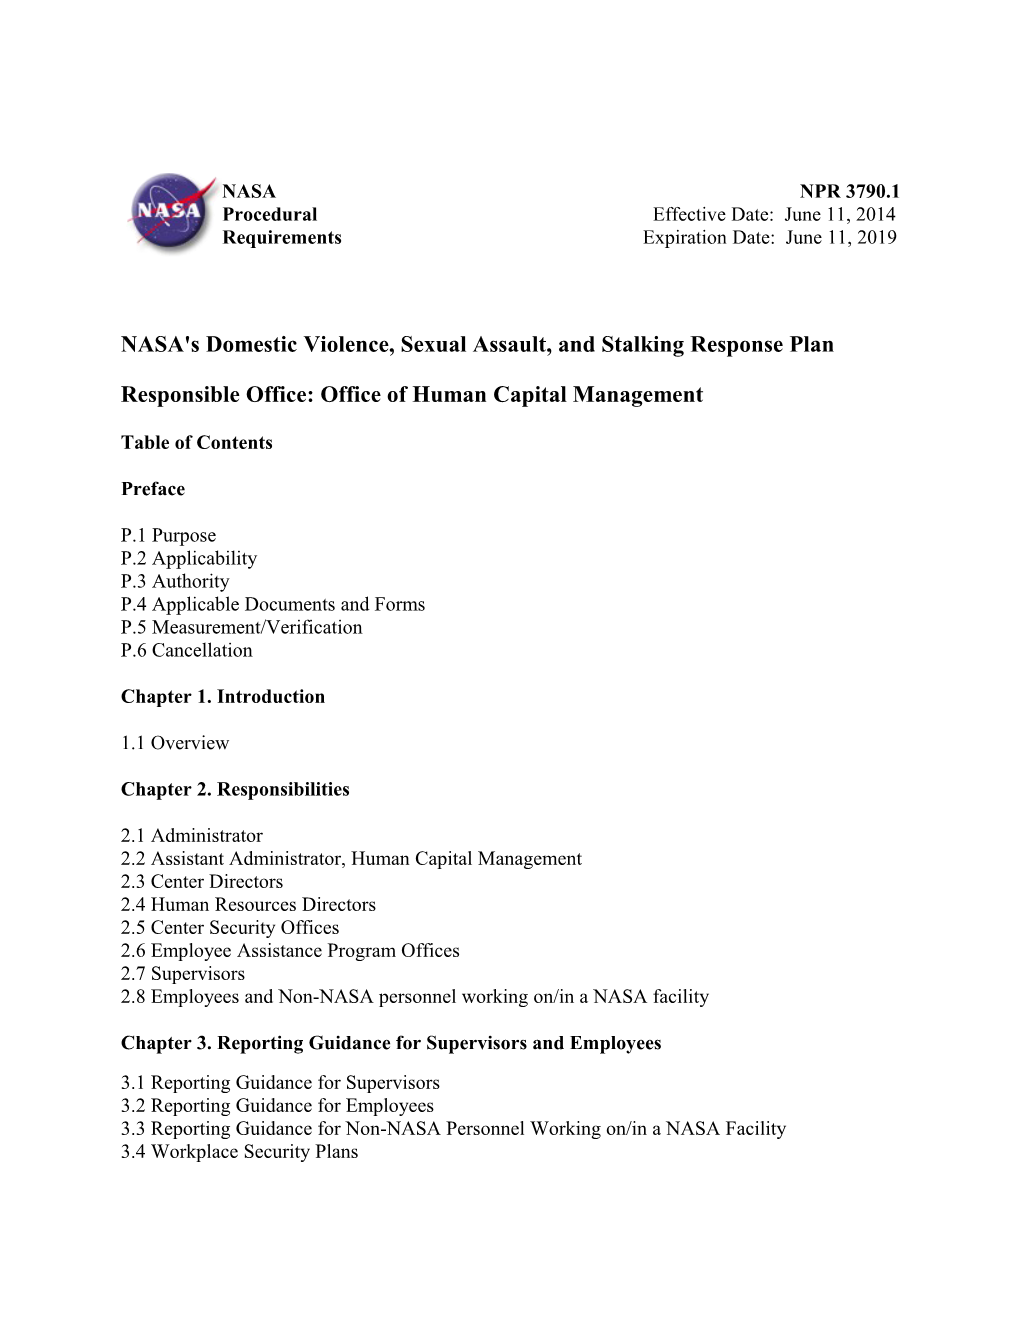 NASA's Domestic Violence, Sexual Assault, and Stalking Response Plan